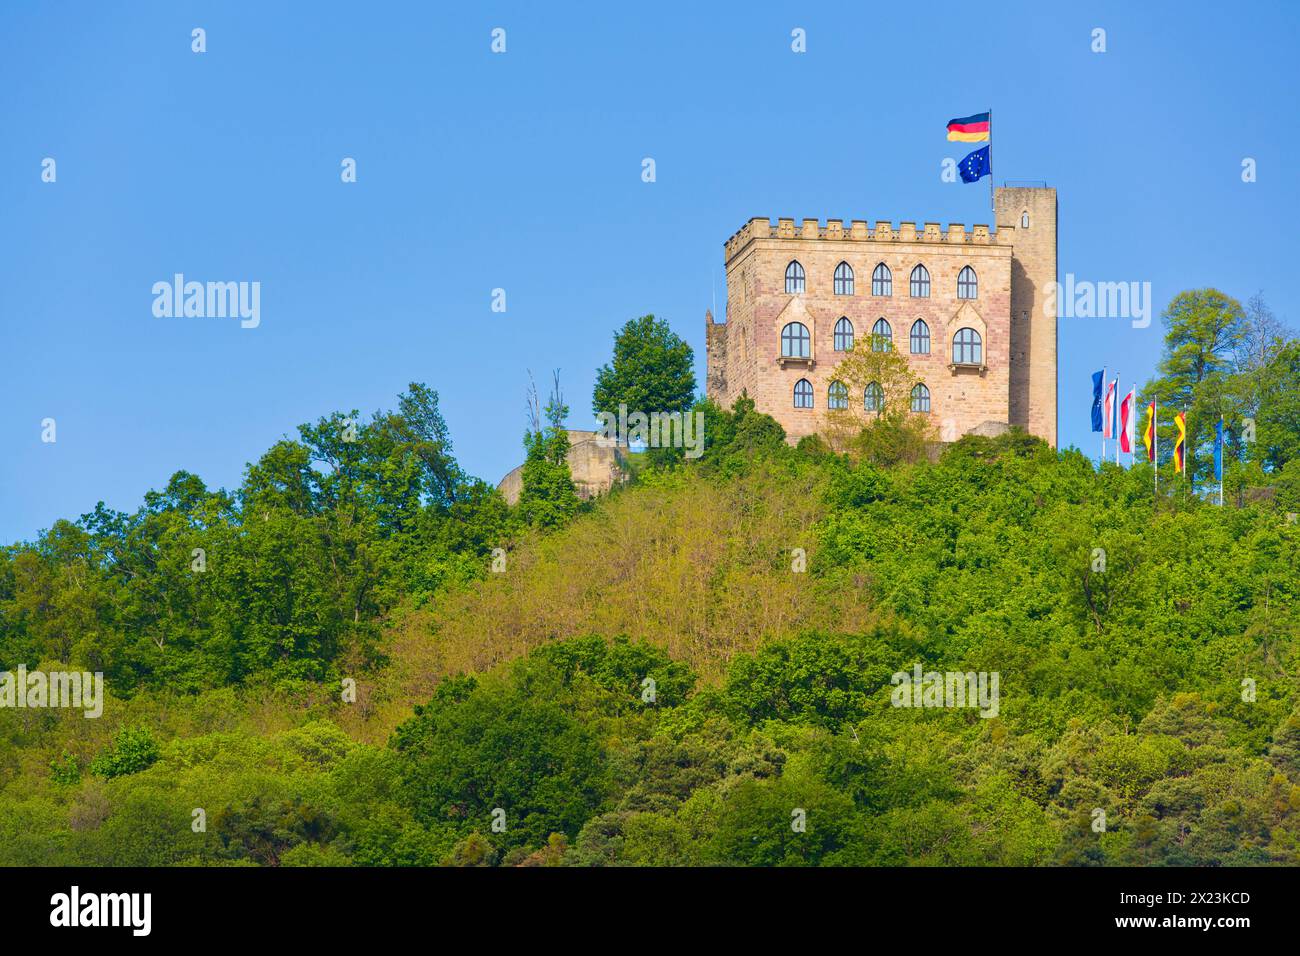 The Hambach Castle in Neustadt an der Weinstrasse, Rhineland-Palatinate, Germany Stock Photo